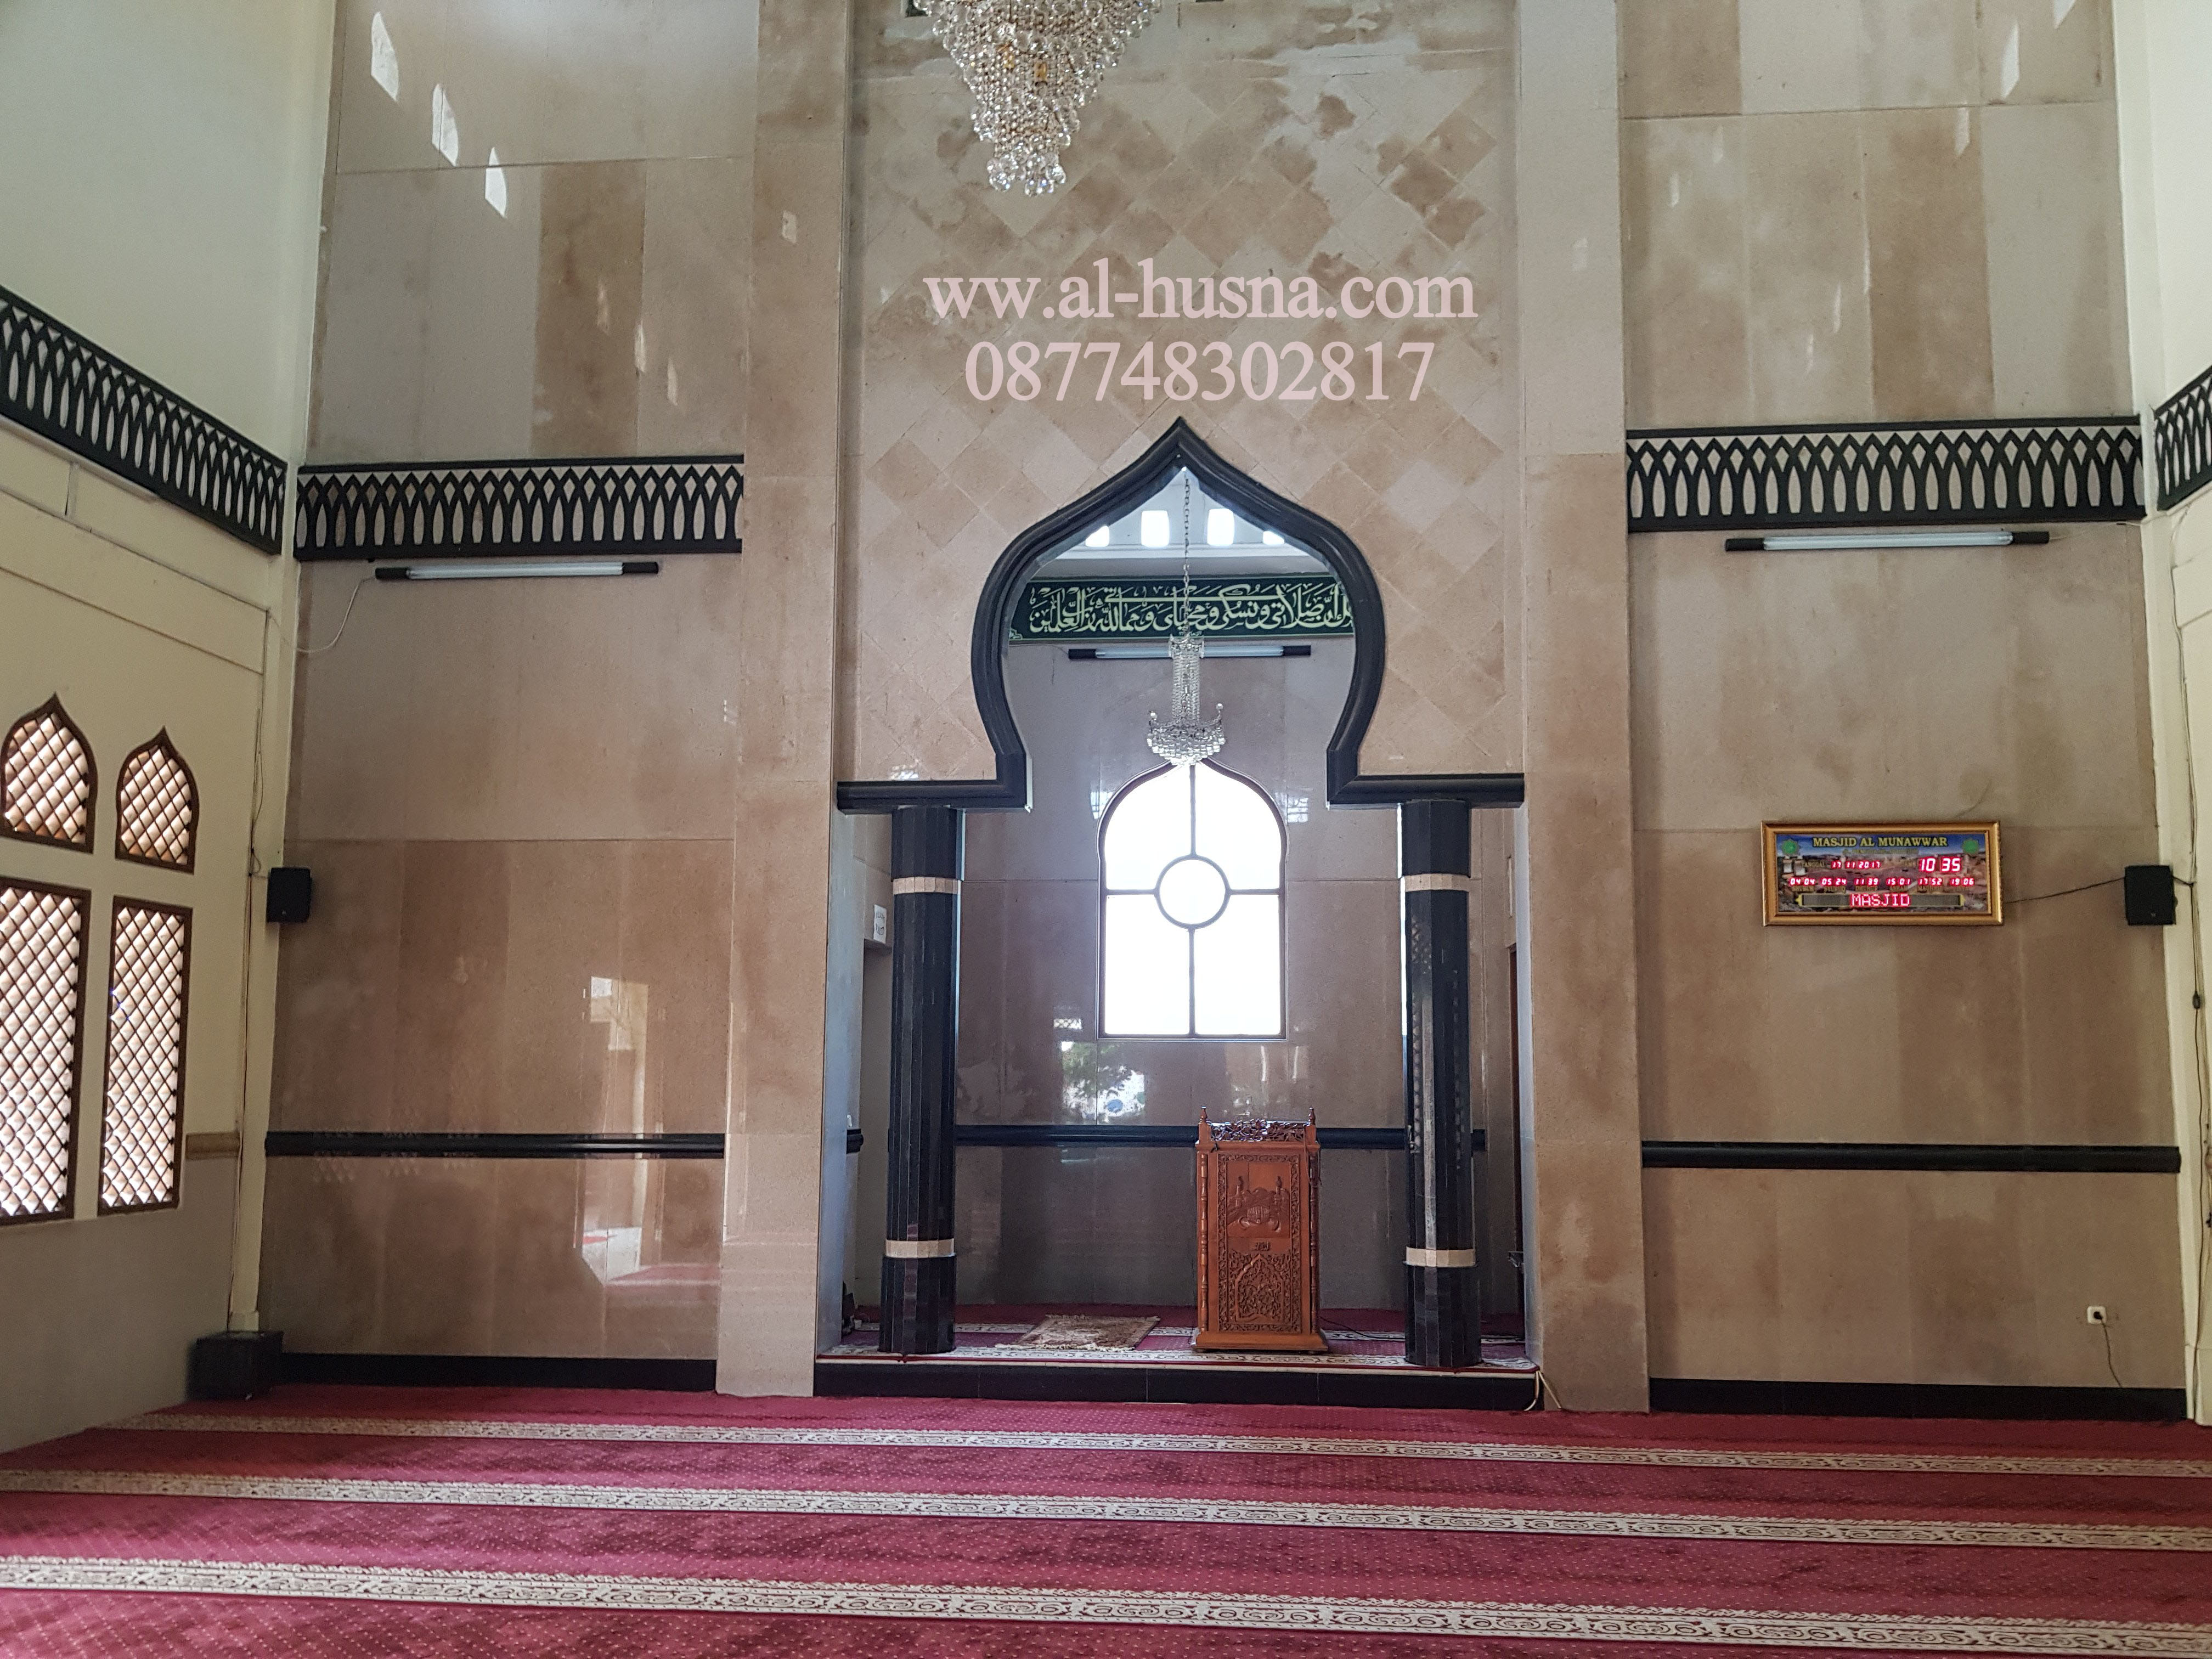 Daftar Harga Karpet Masjid Di Karangmekar Kedungwaringin Bekasi 